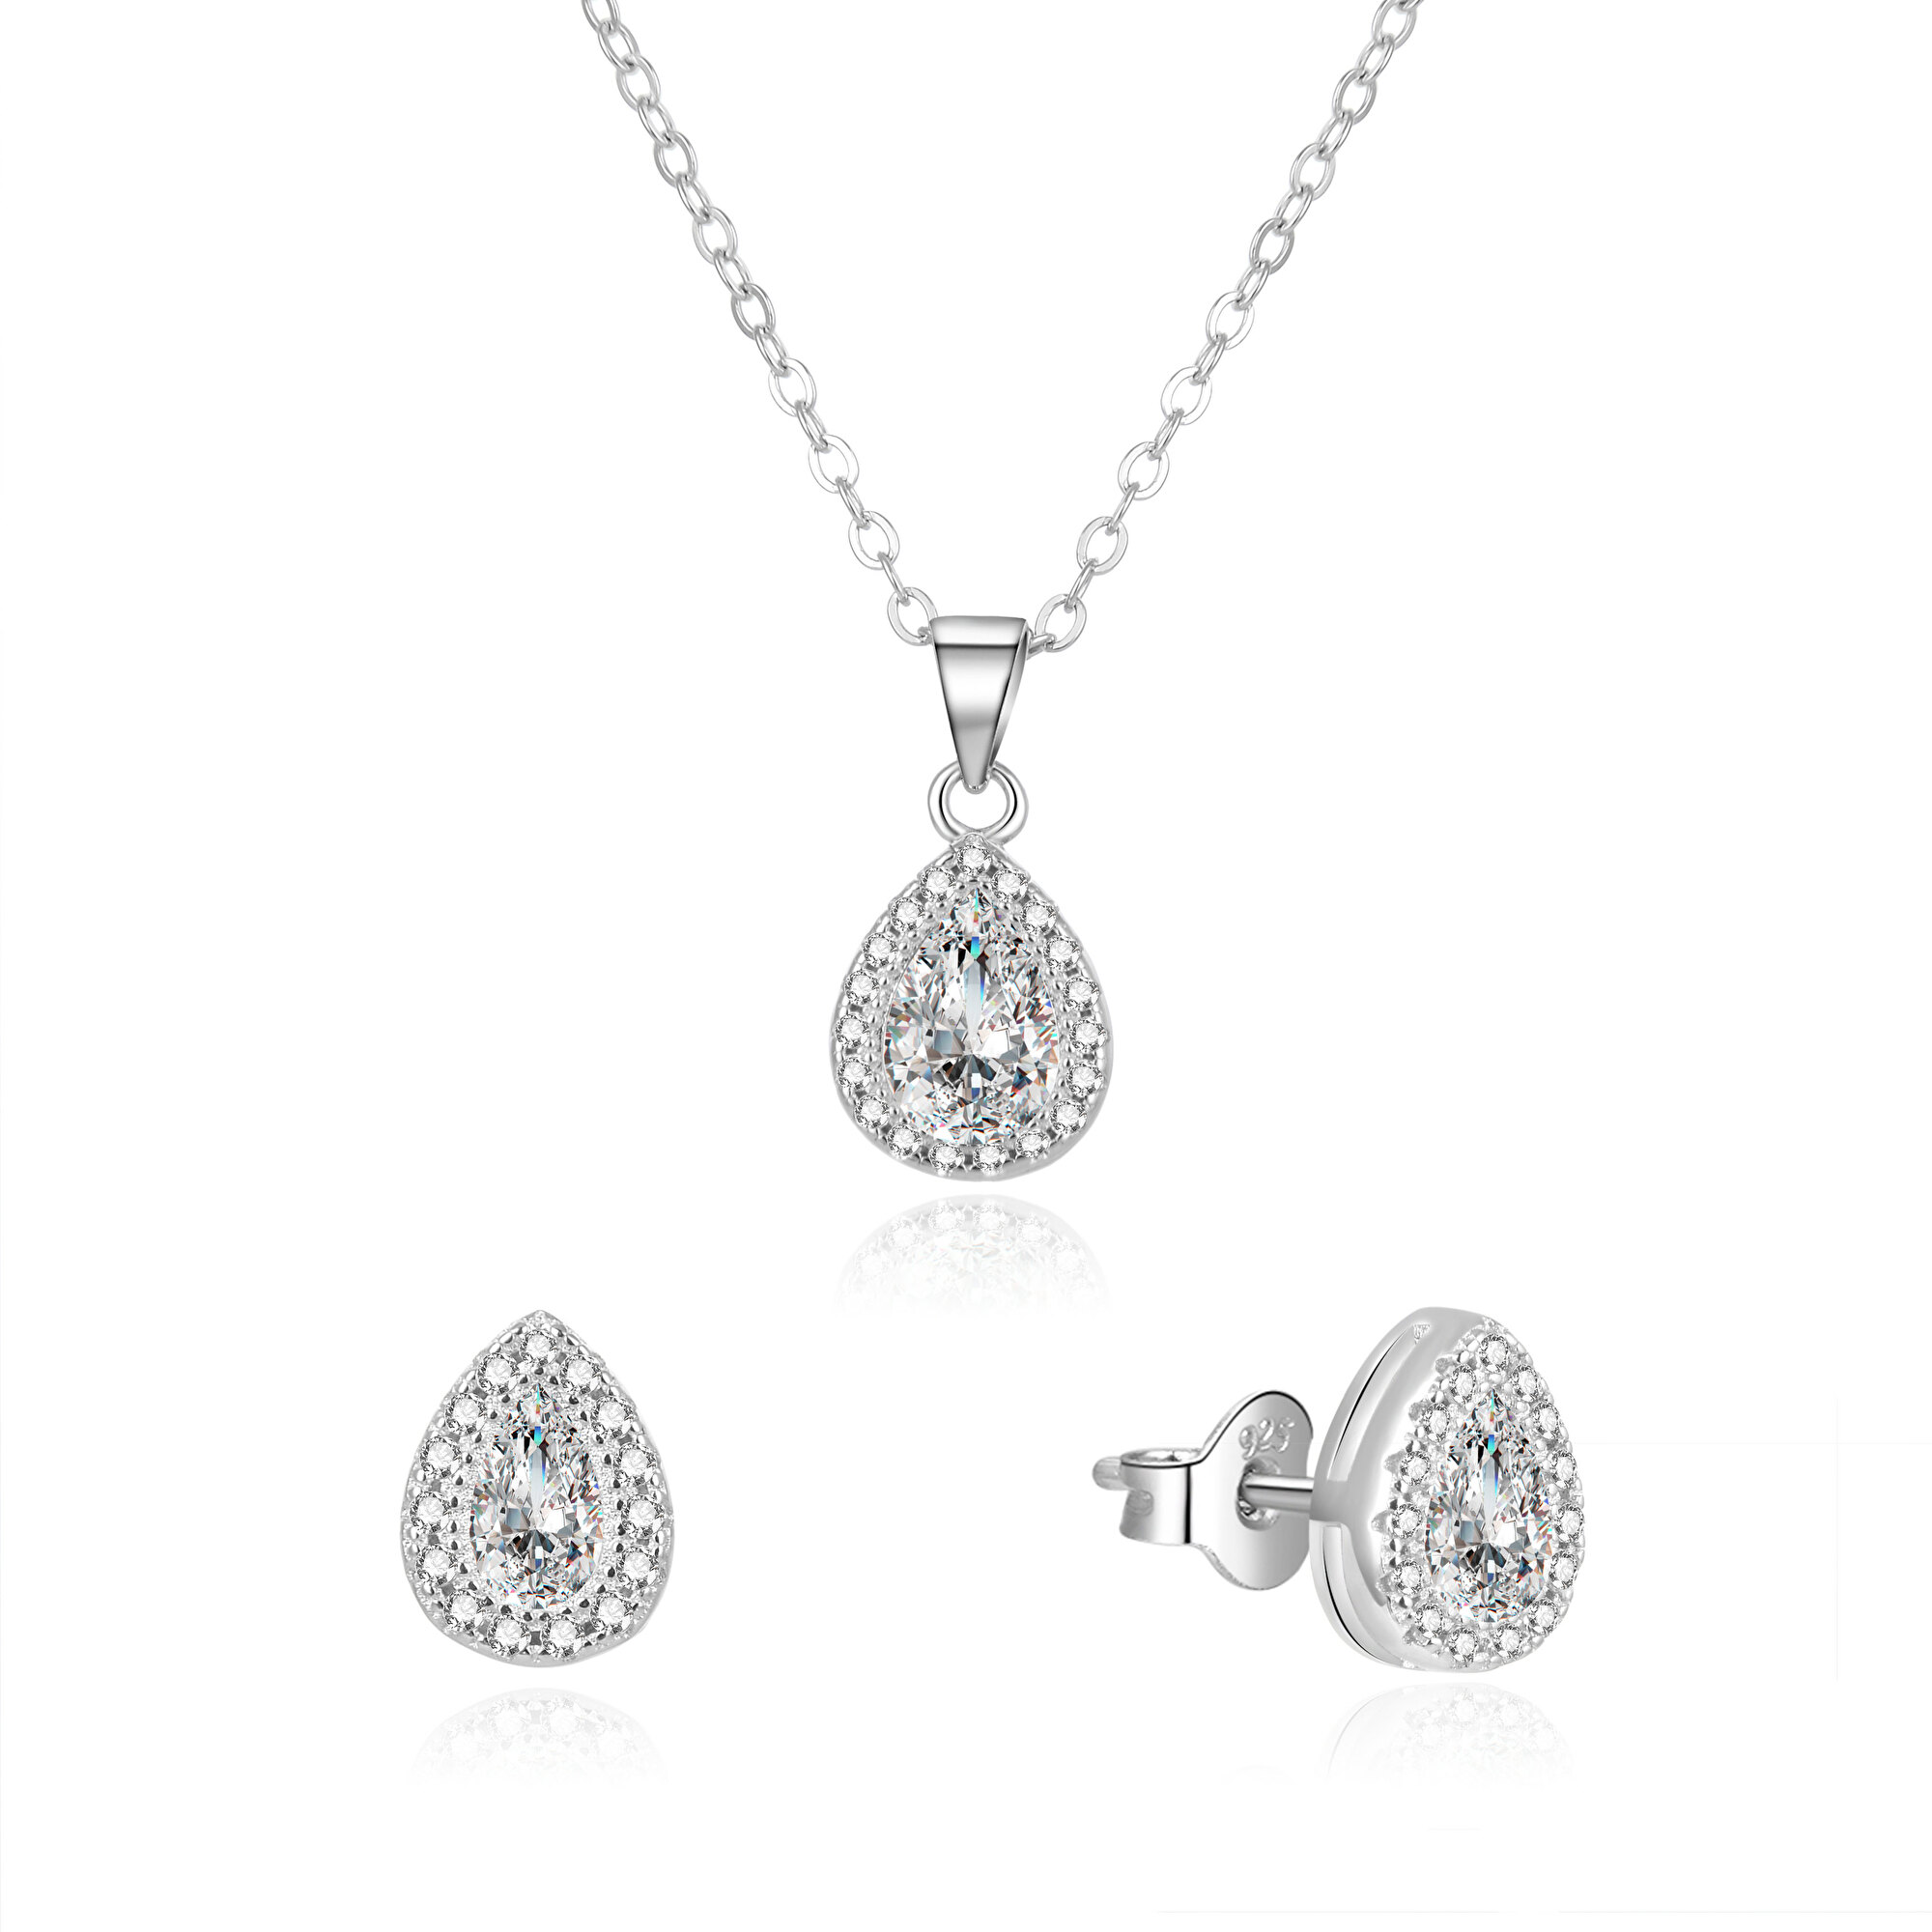 Oslnivá súprava šperkov so zirkónmi AGSET188R (náhrdelník, náušnice)